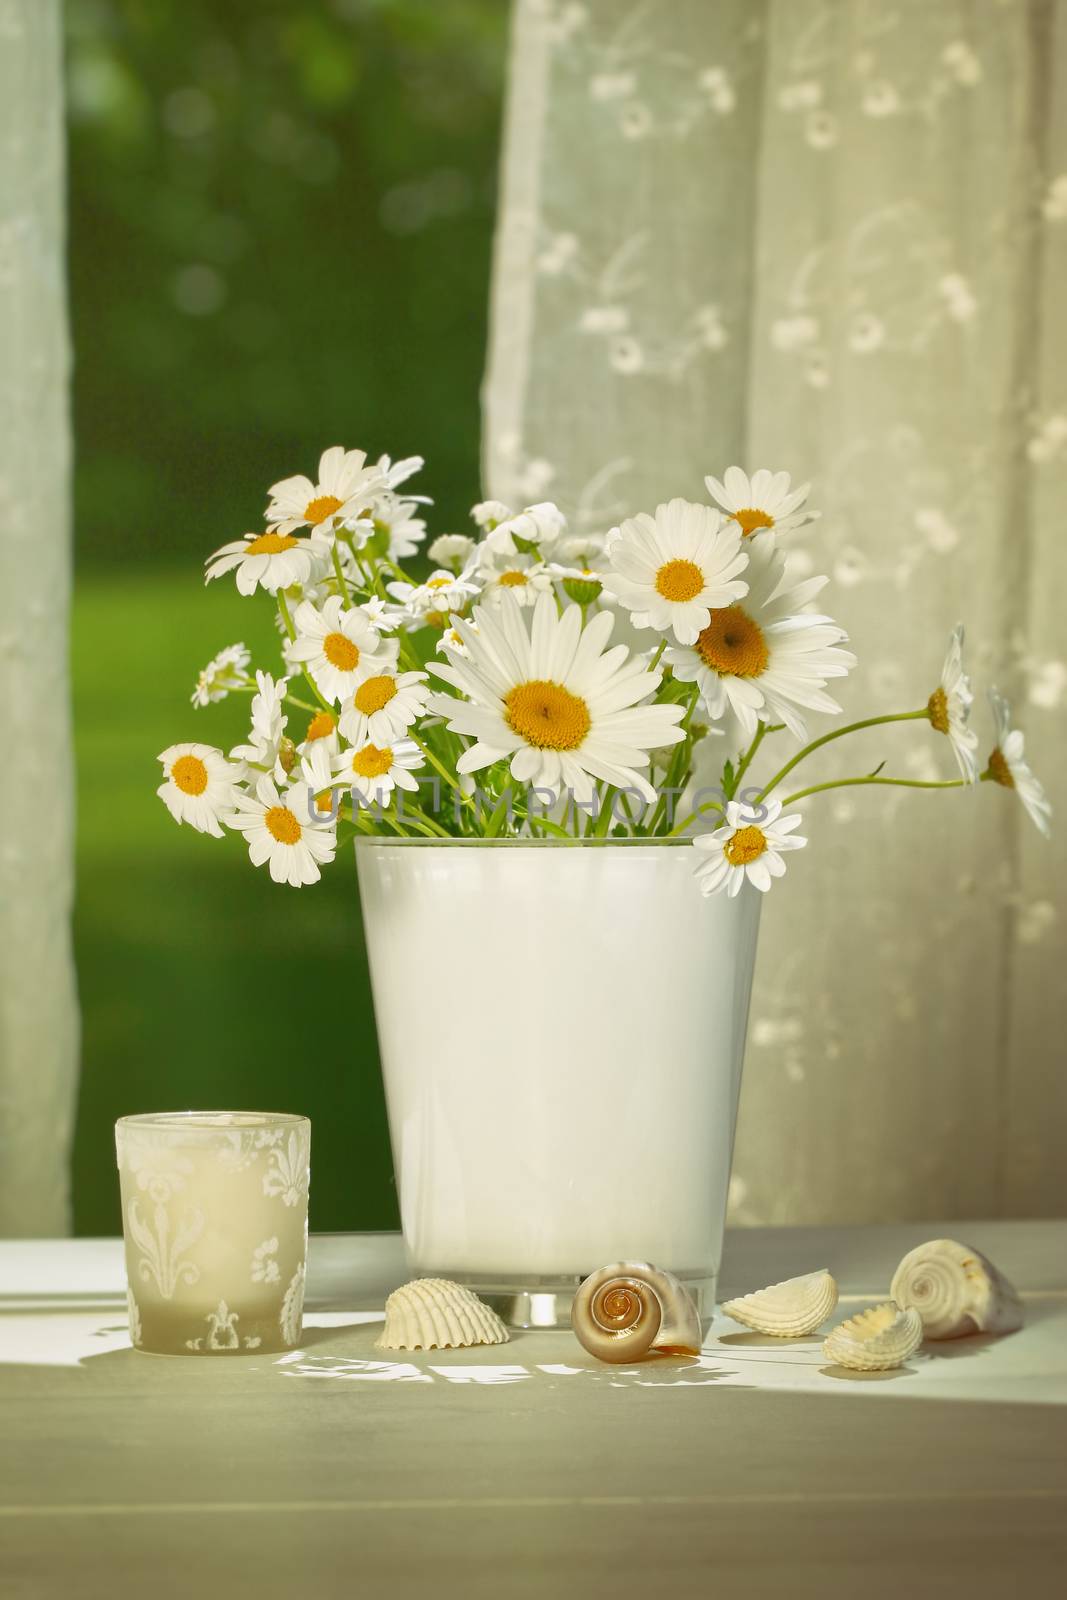 Summer daisies in vase in front of window